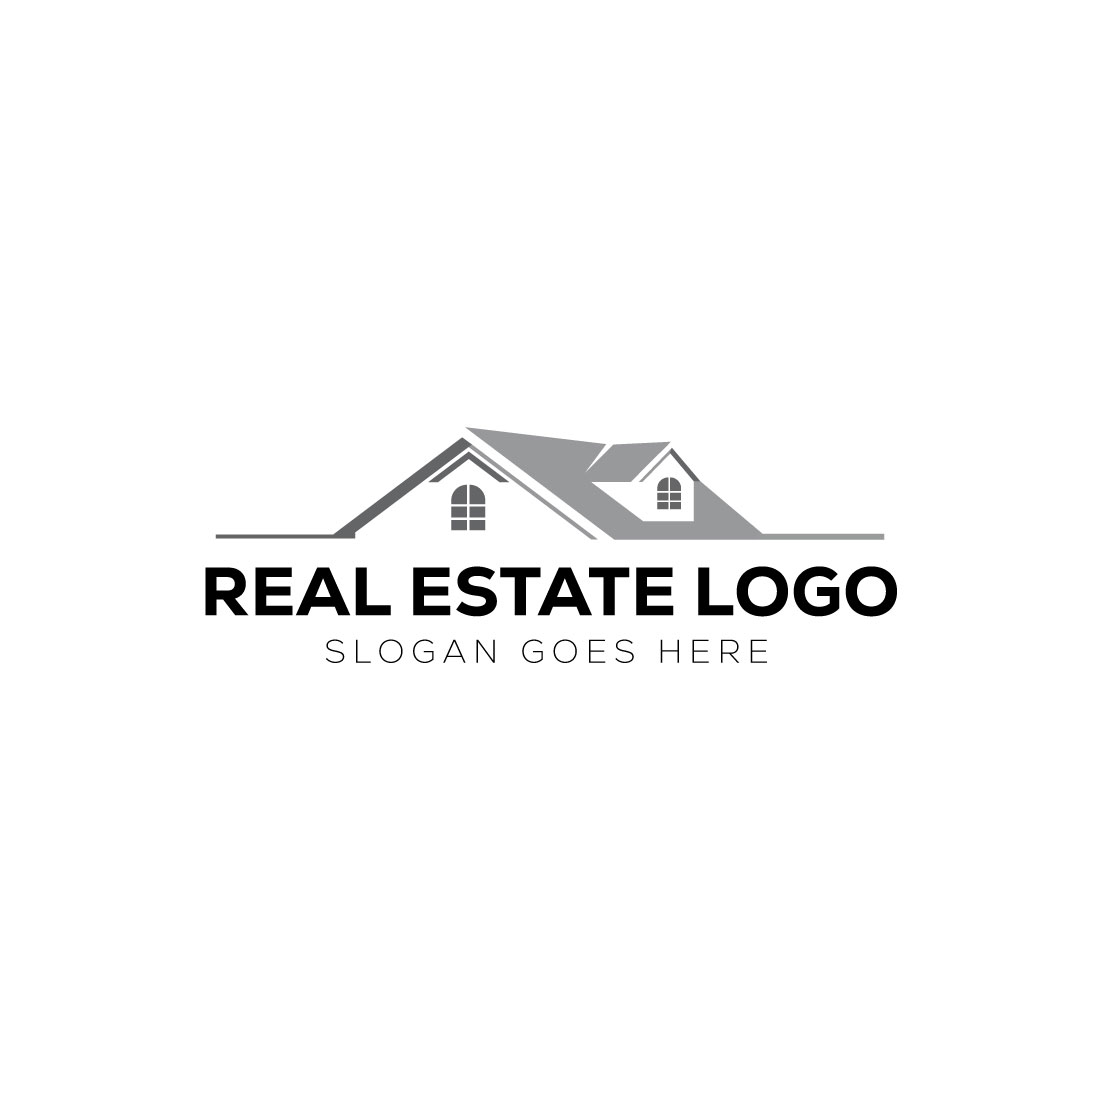 Creative real estate logo design preview image.